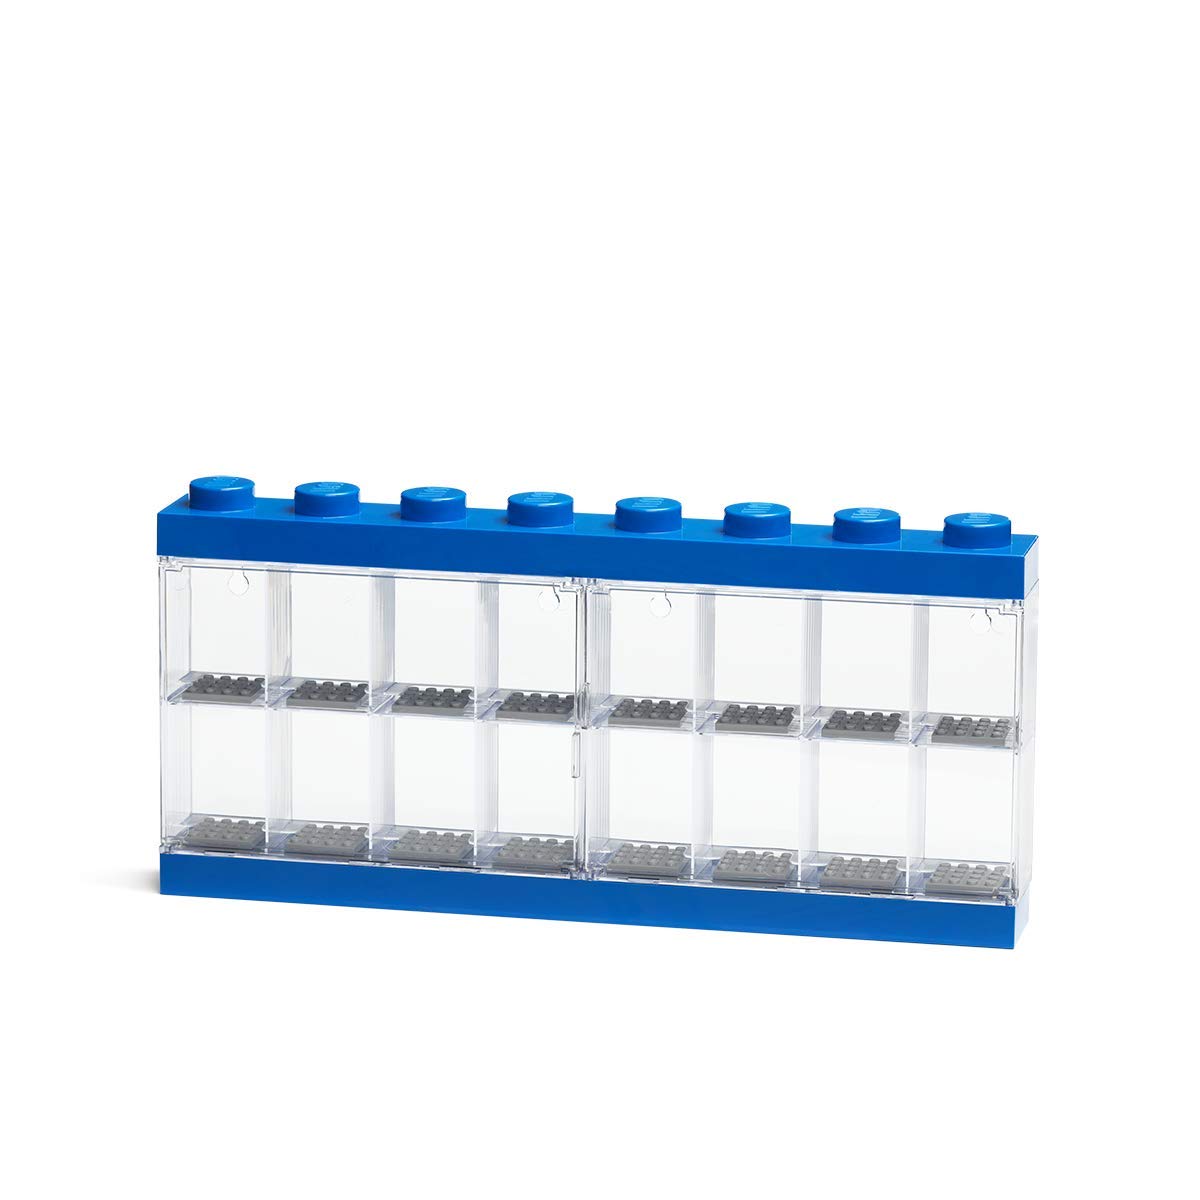 Lego Mini Figure Display Case 16 Blue One Size